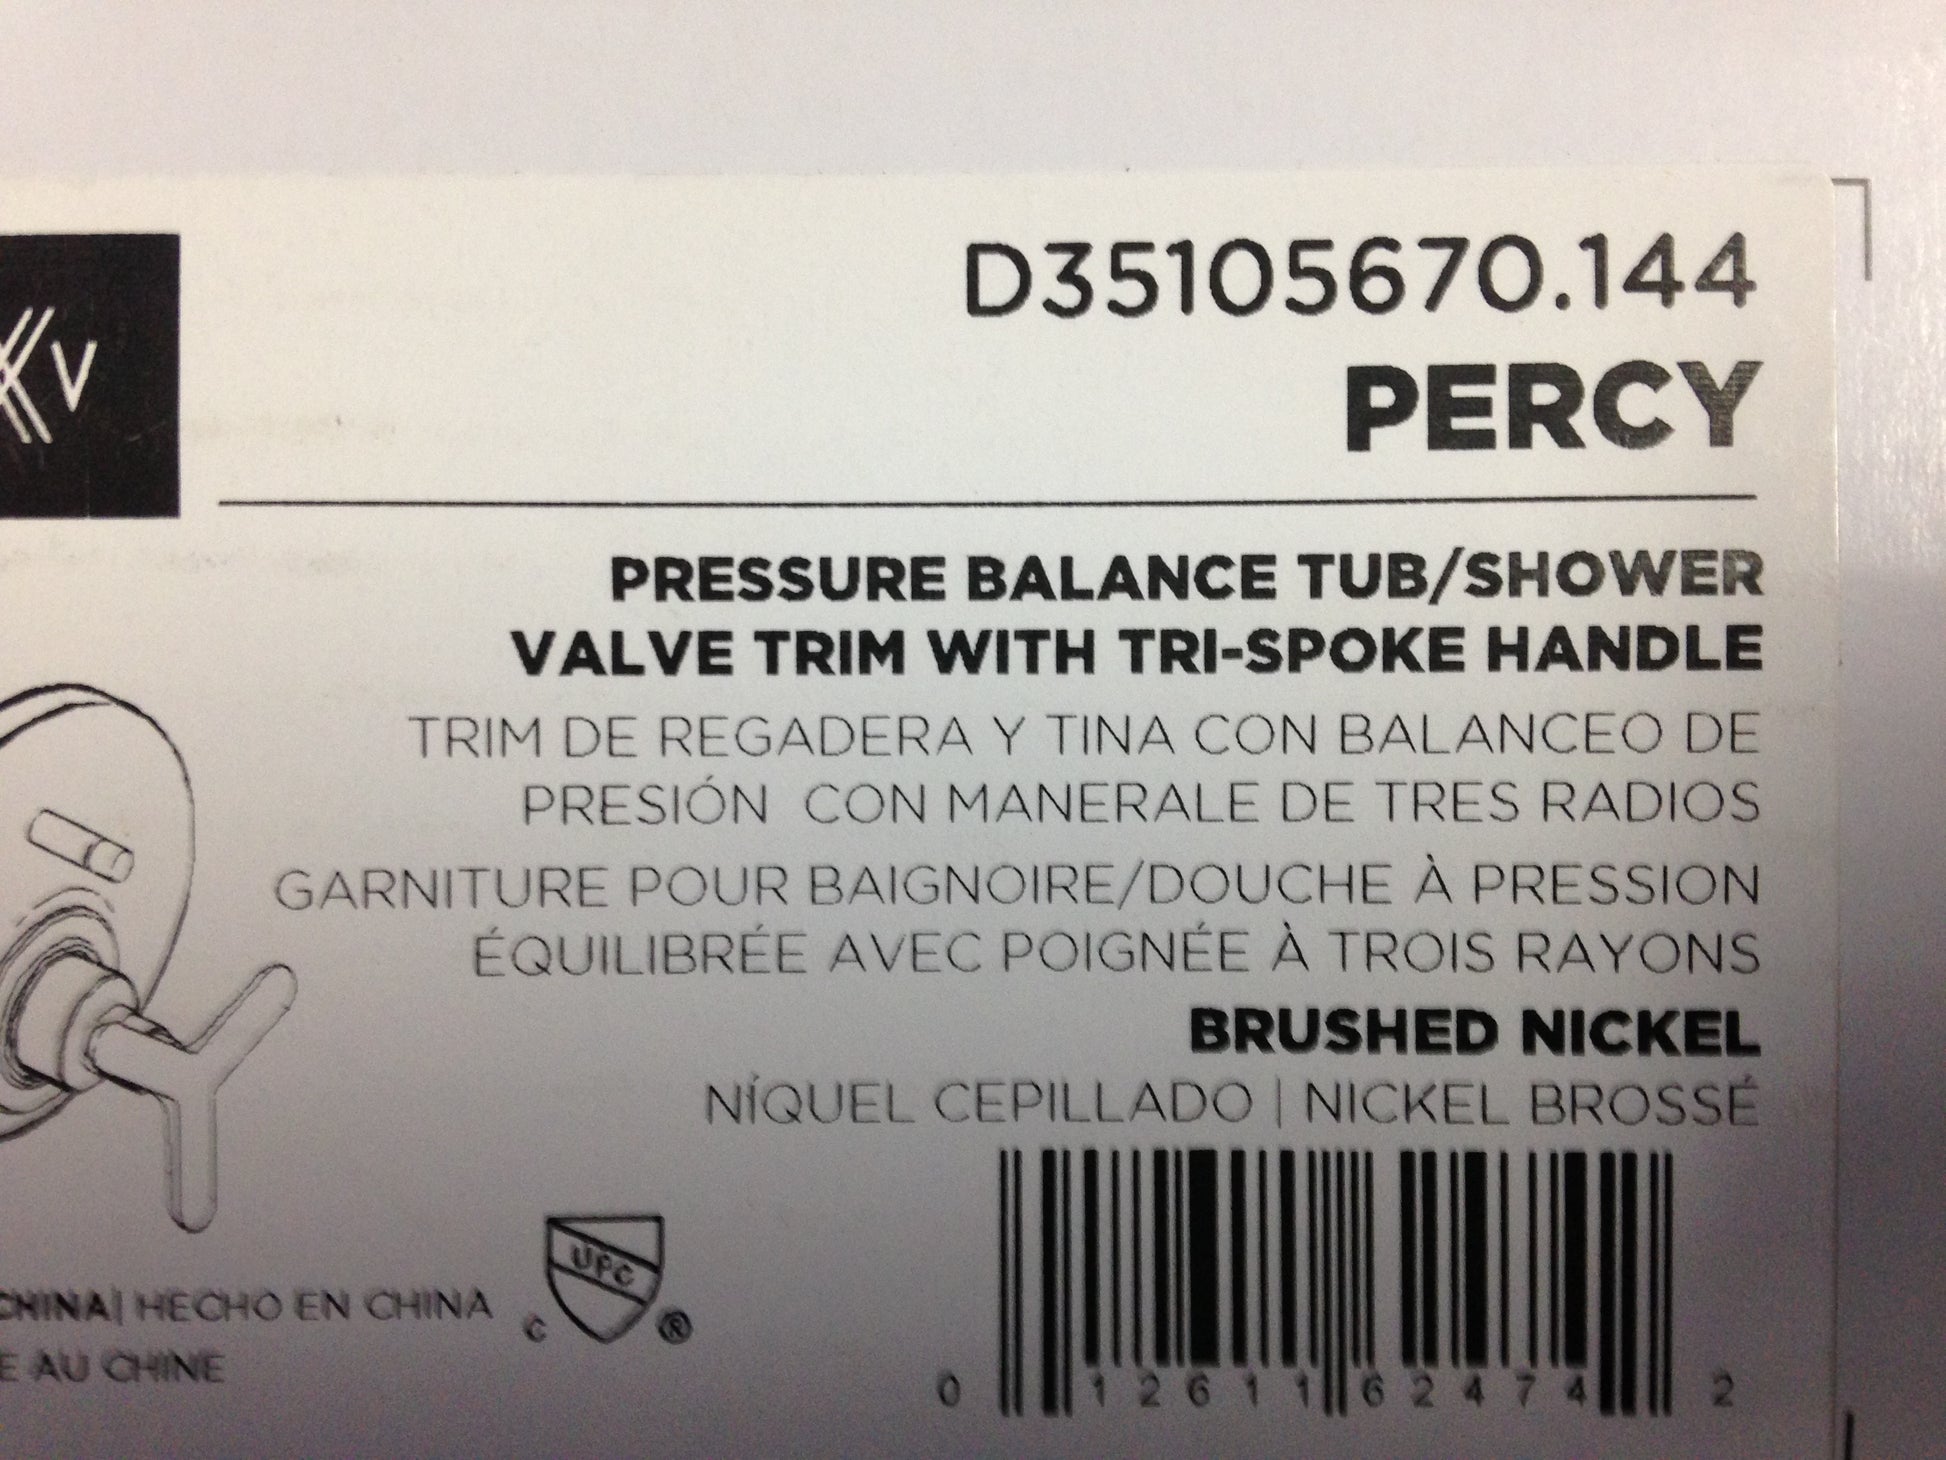 PERCY PRESSURE BALANCE TUB/SHOWER VALVE TRIM WITH TRI-SPOKE HANDLE